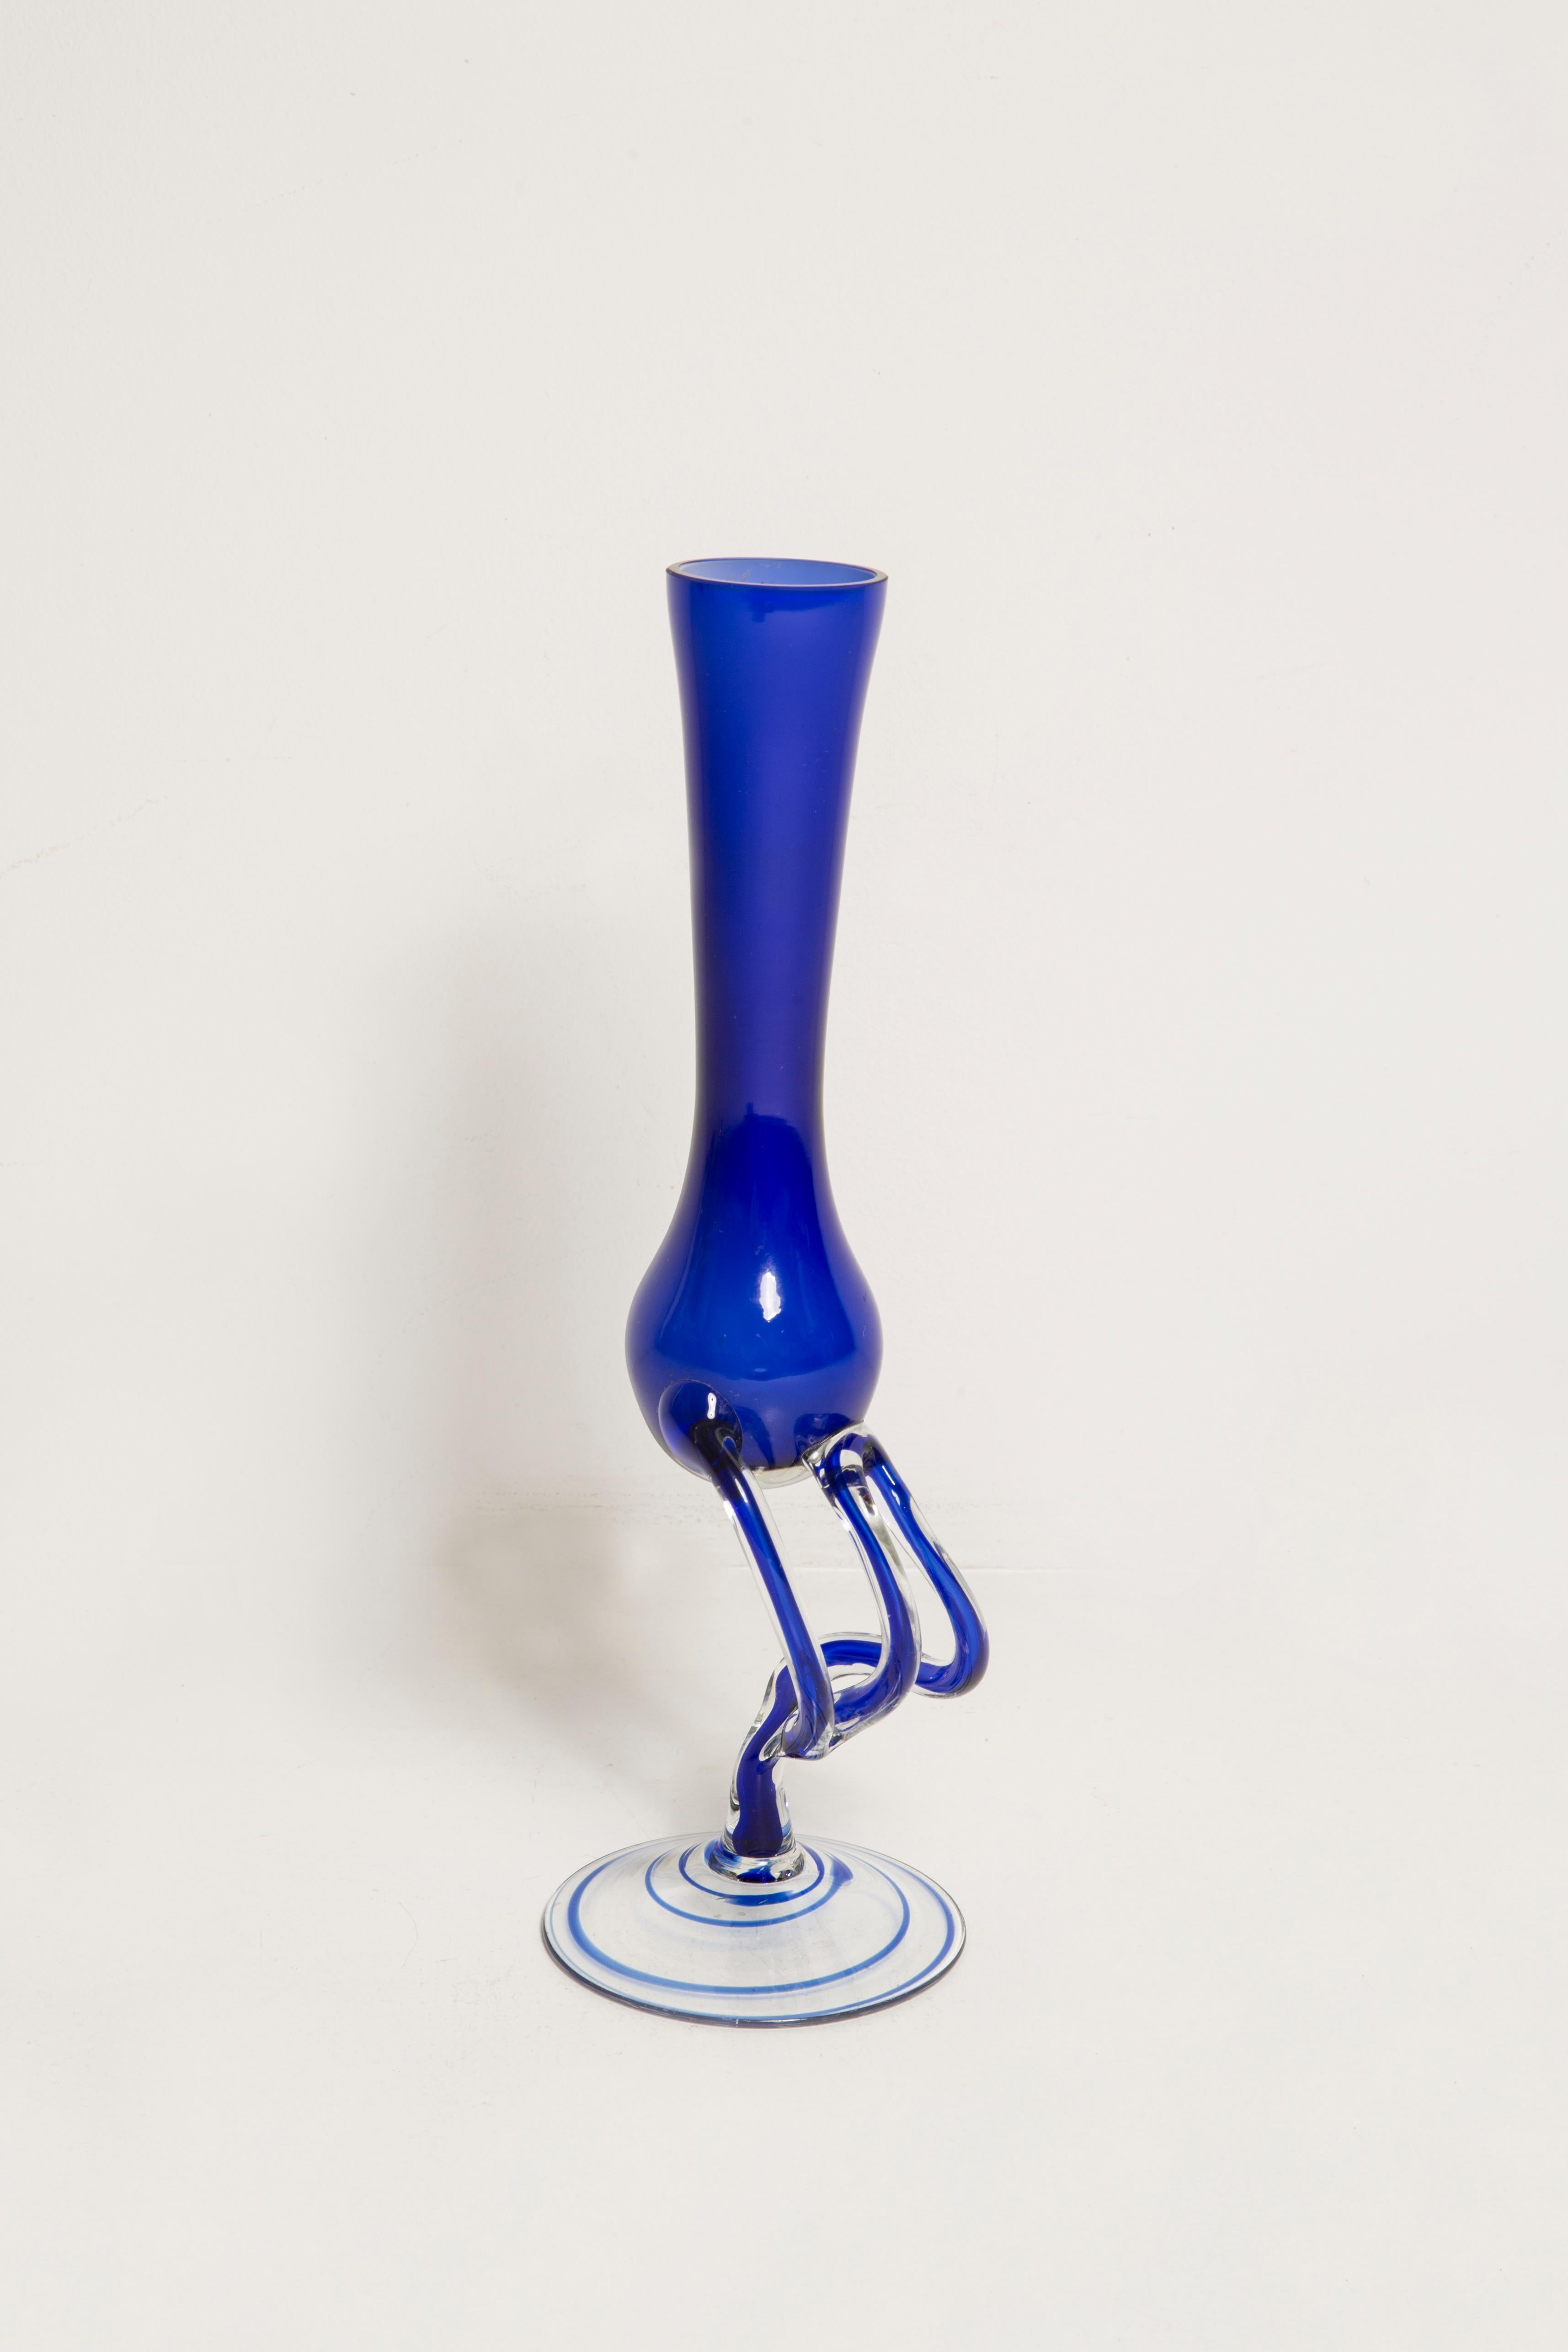 Small Mid Century Ultramarine Blue Artistic Vase, Europe, 1960s For Sale 2